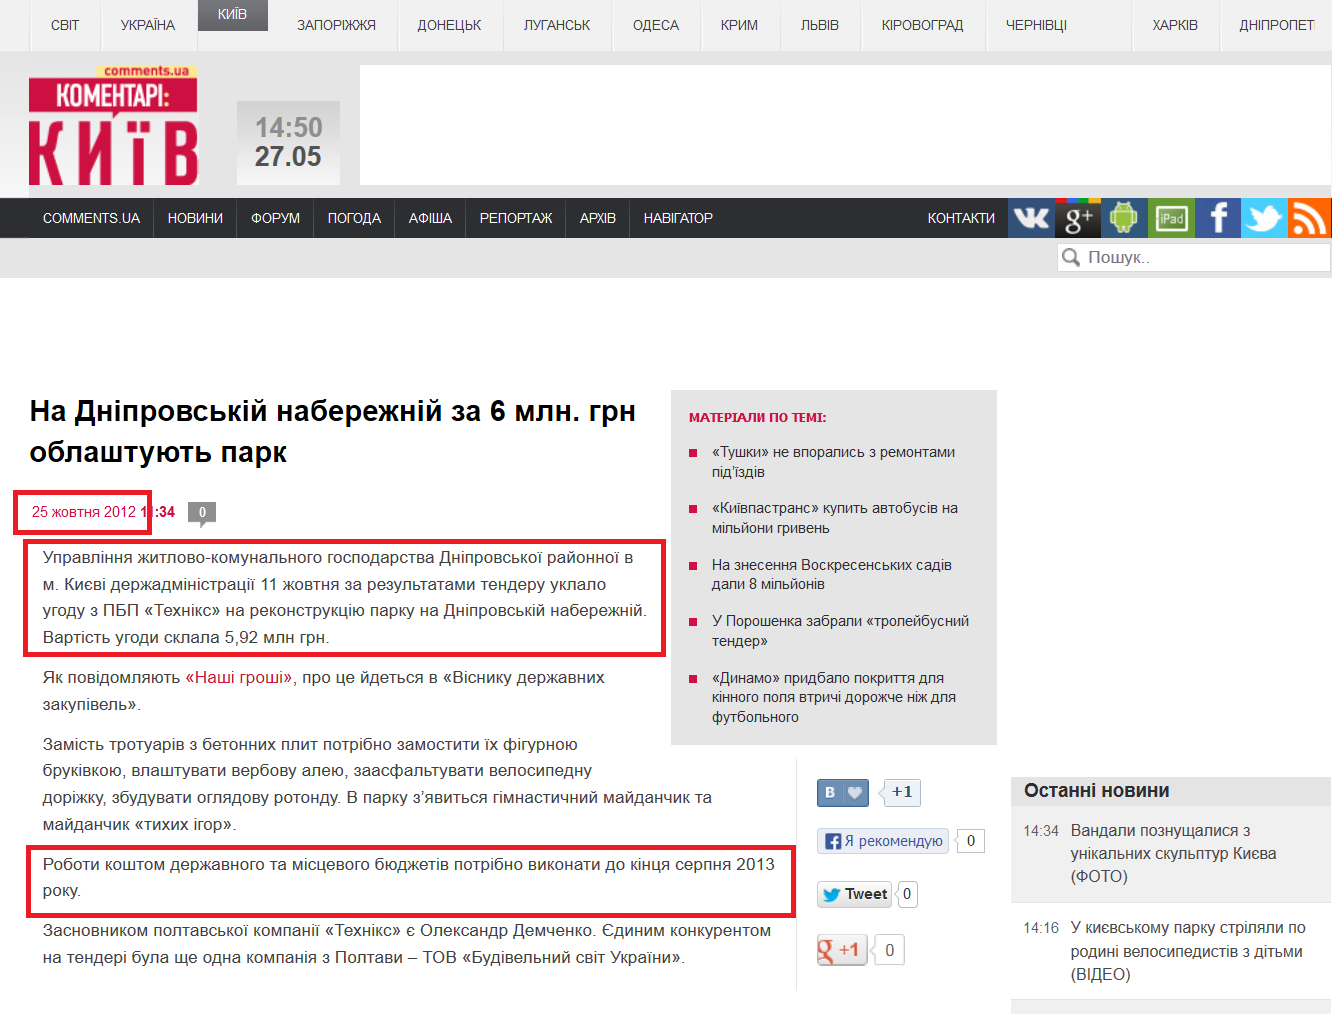 http://kyiv.comments.ua/news/2012/10/25/113439.html